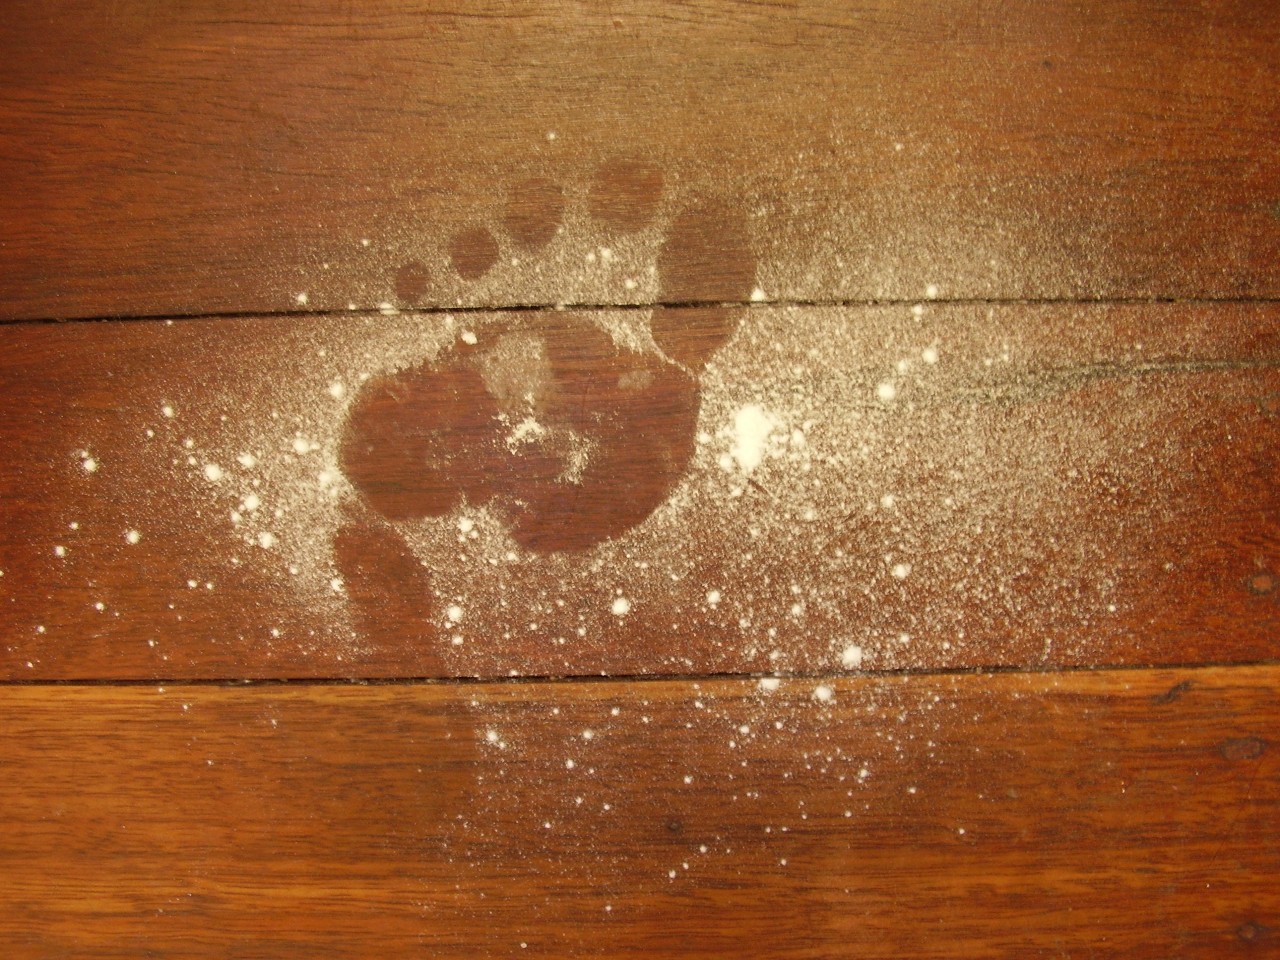 footprint in flour